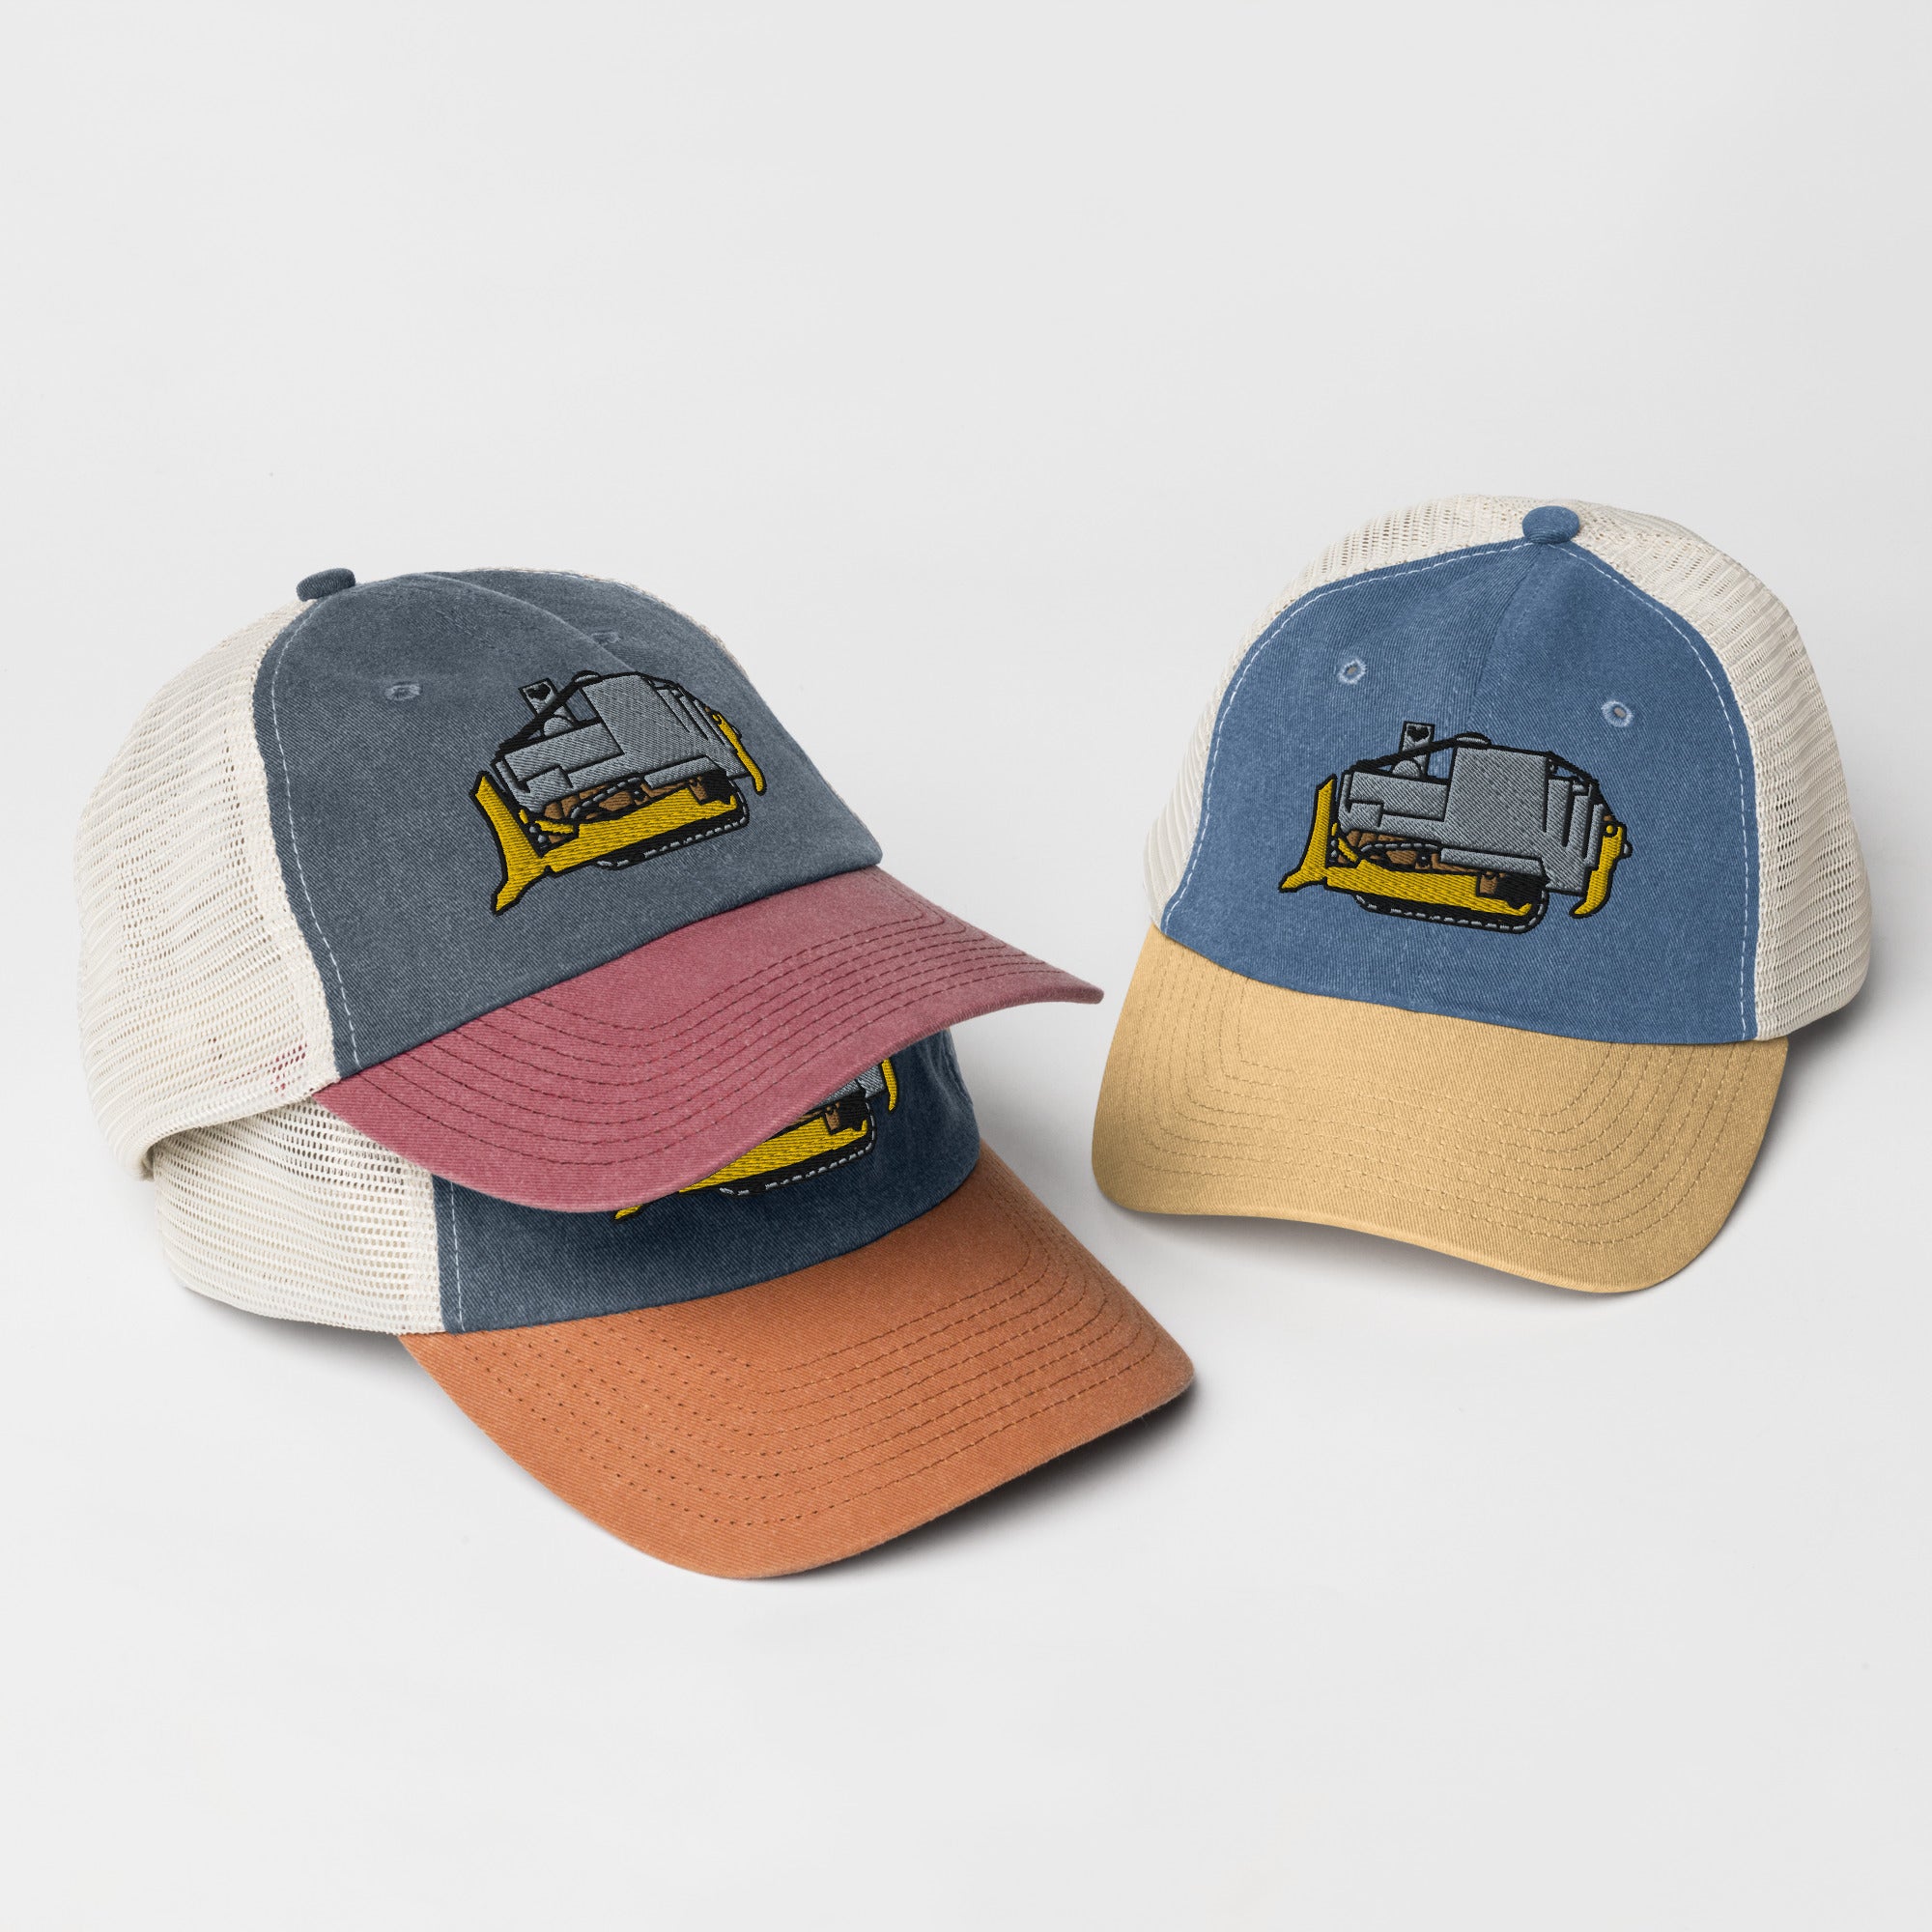 Killdozer Pigment-dyed Trucker Hat